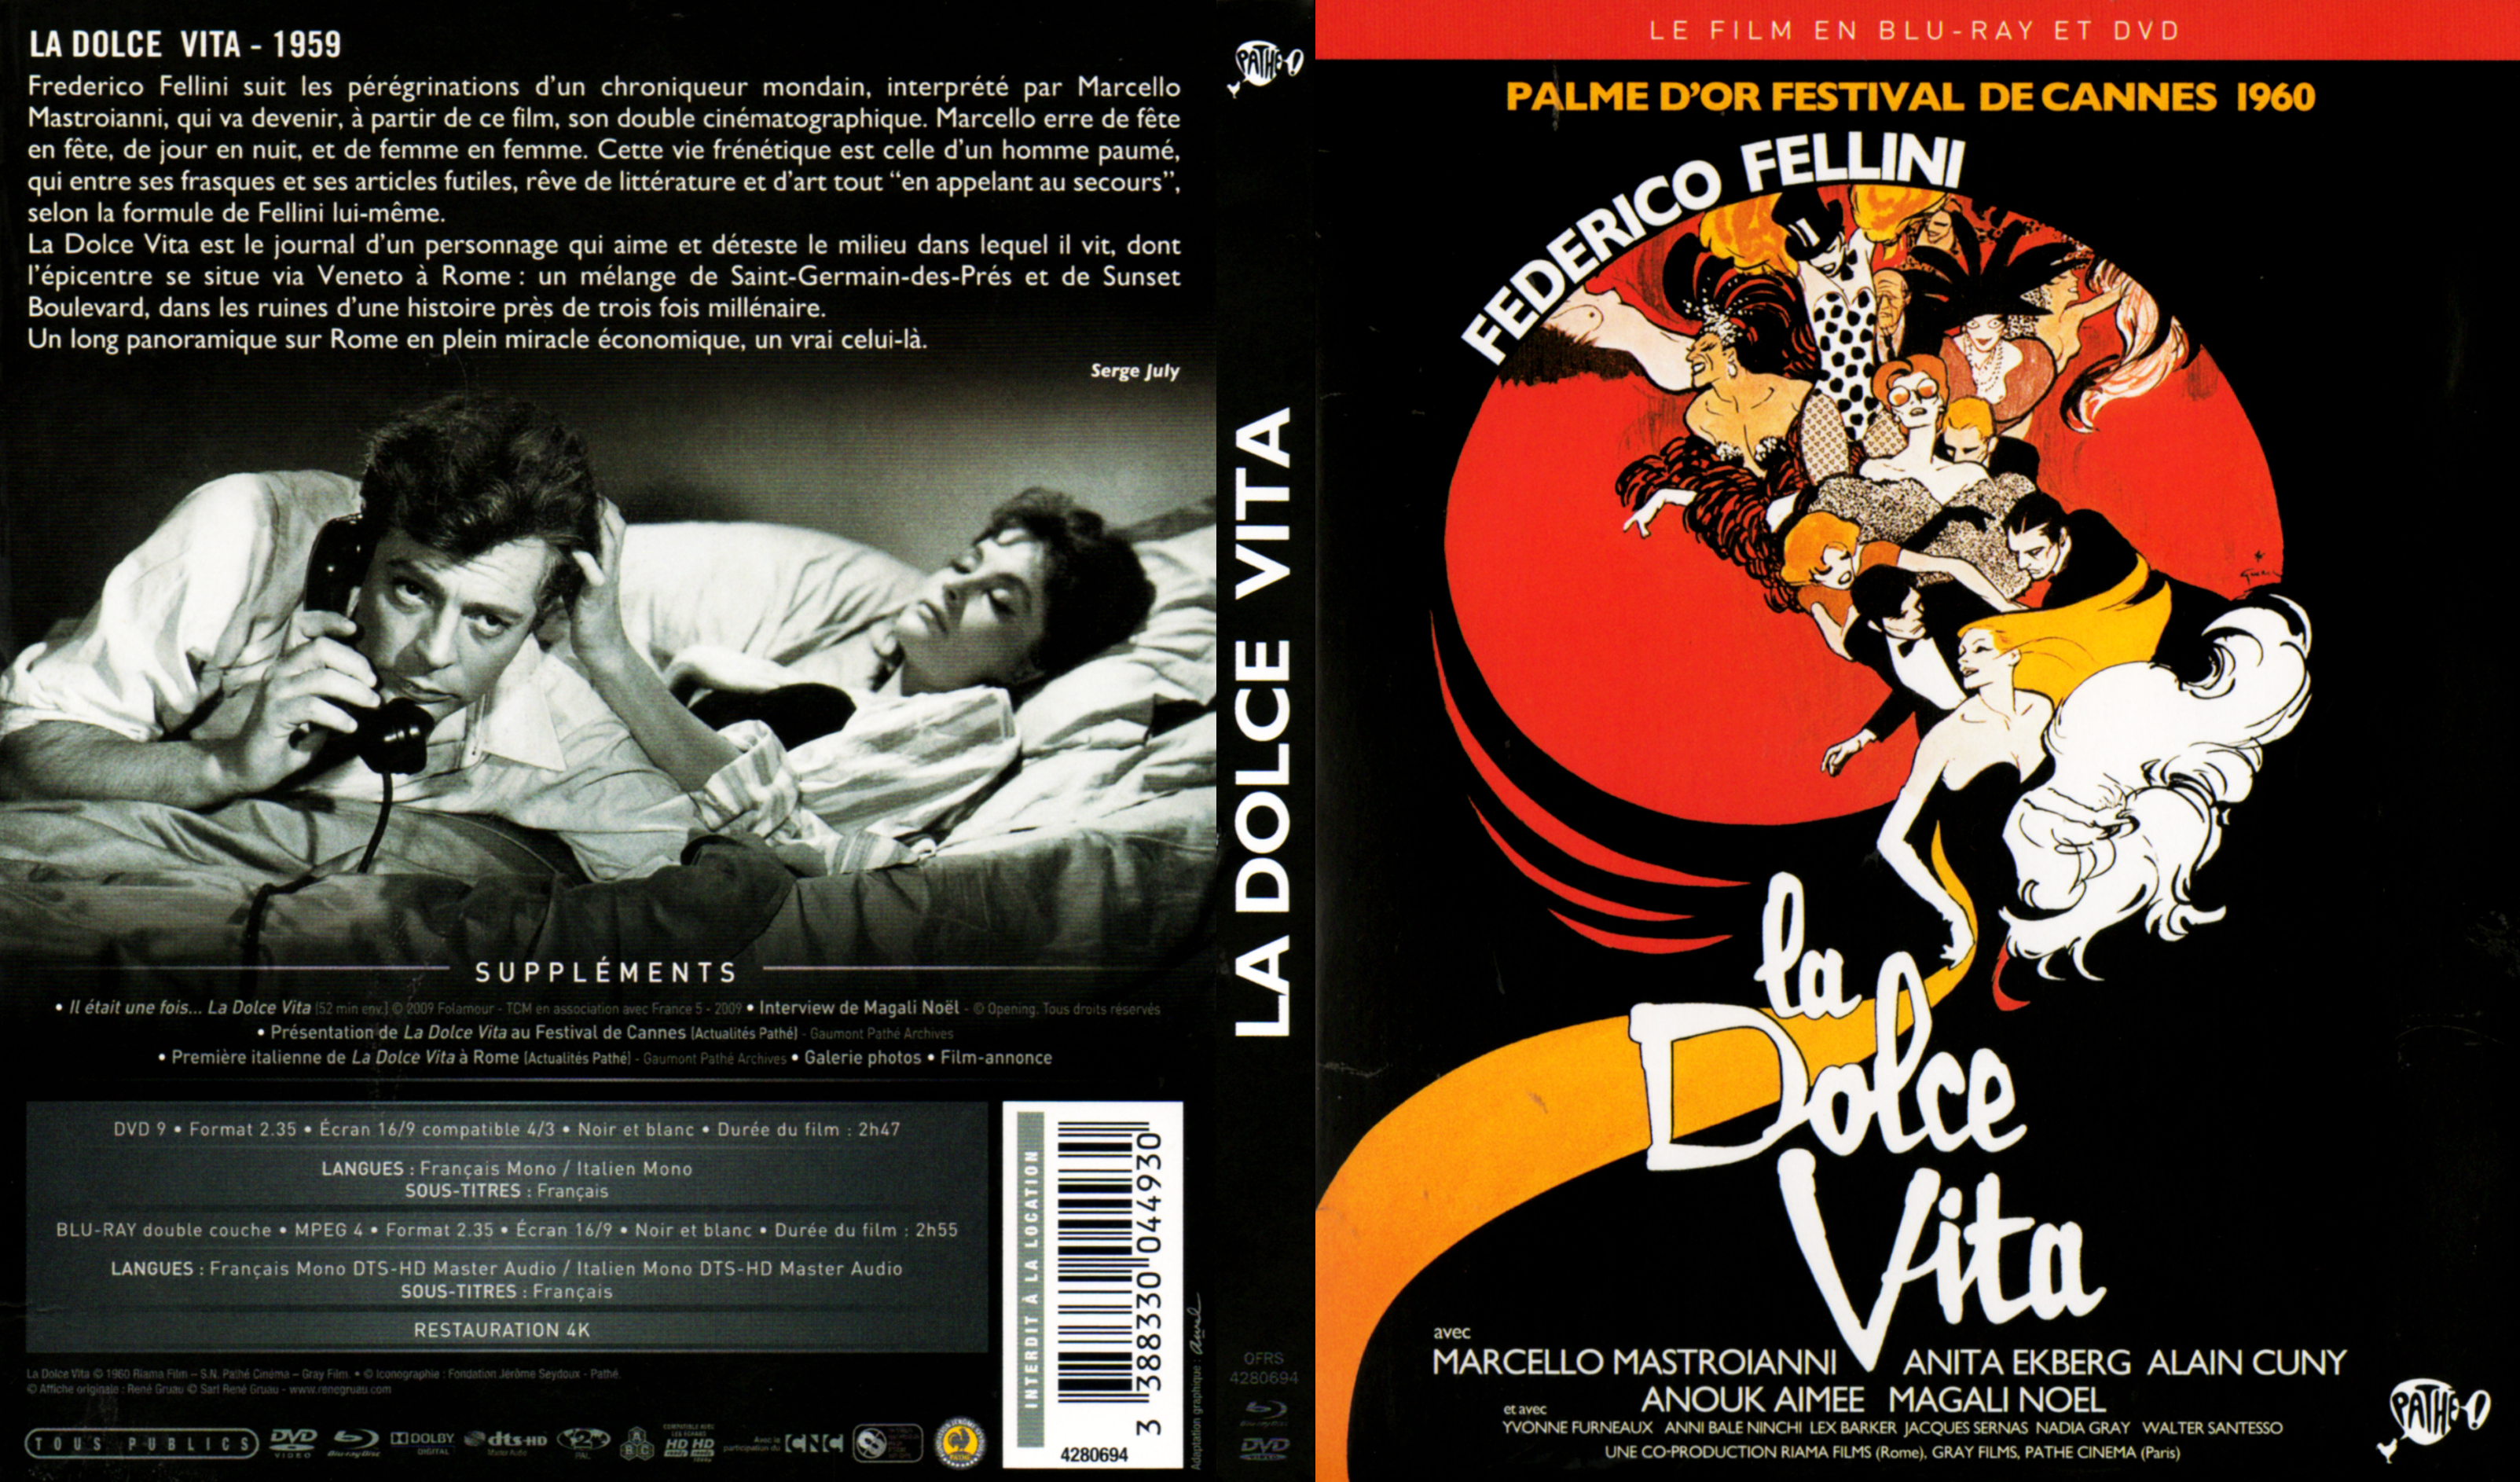 Jaquette DVD de La Dolce Vita (BLU-RAY) - Cinéma Passion